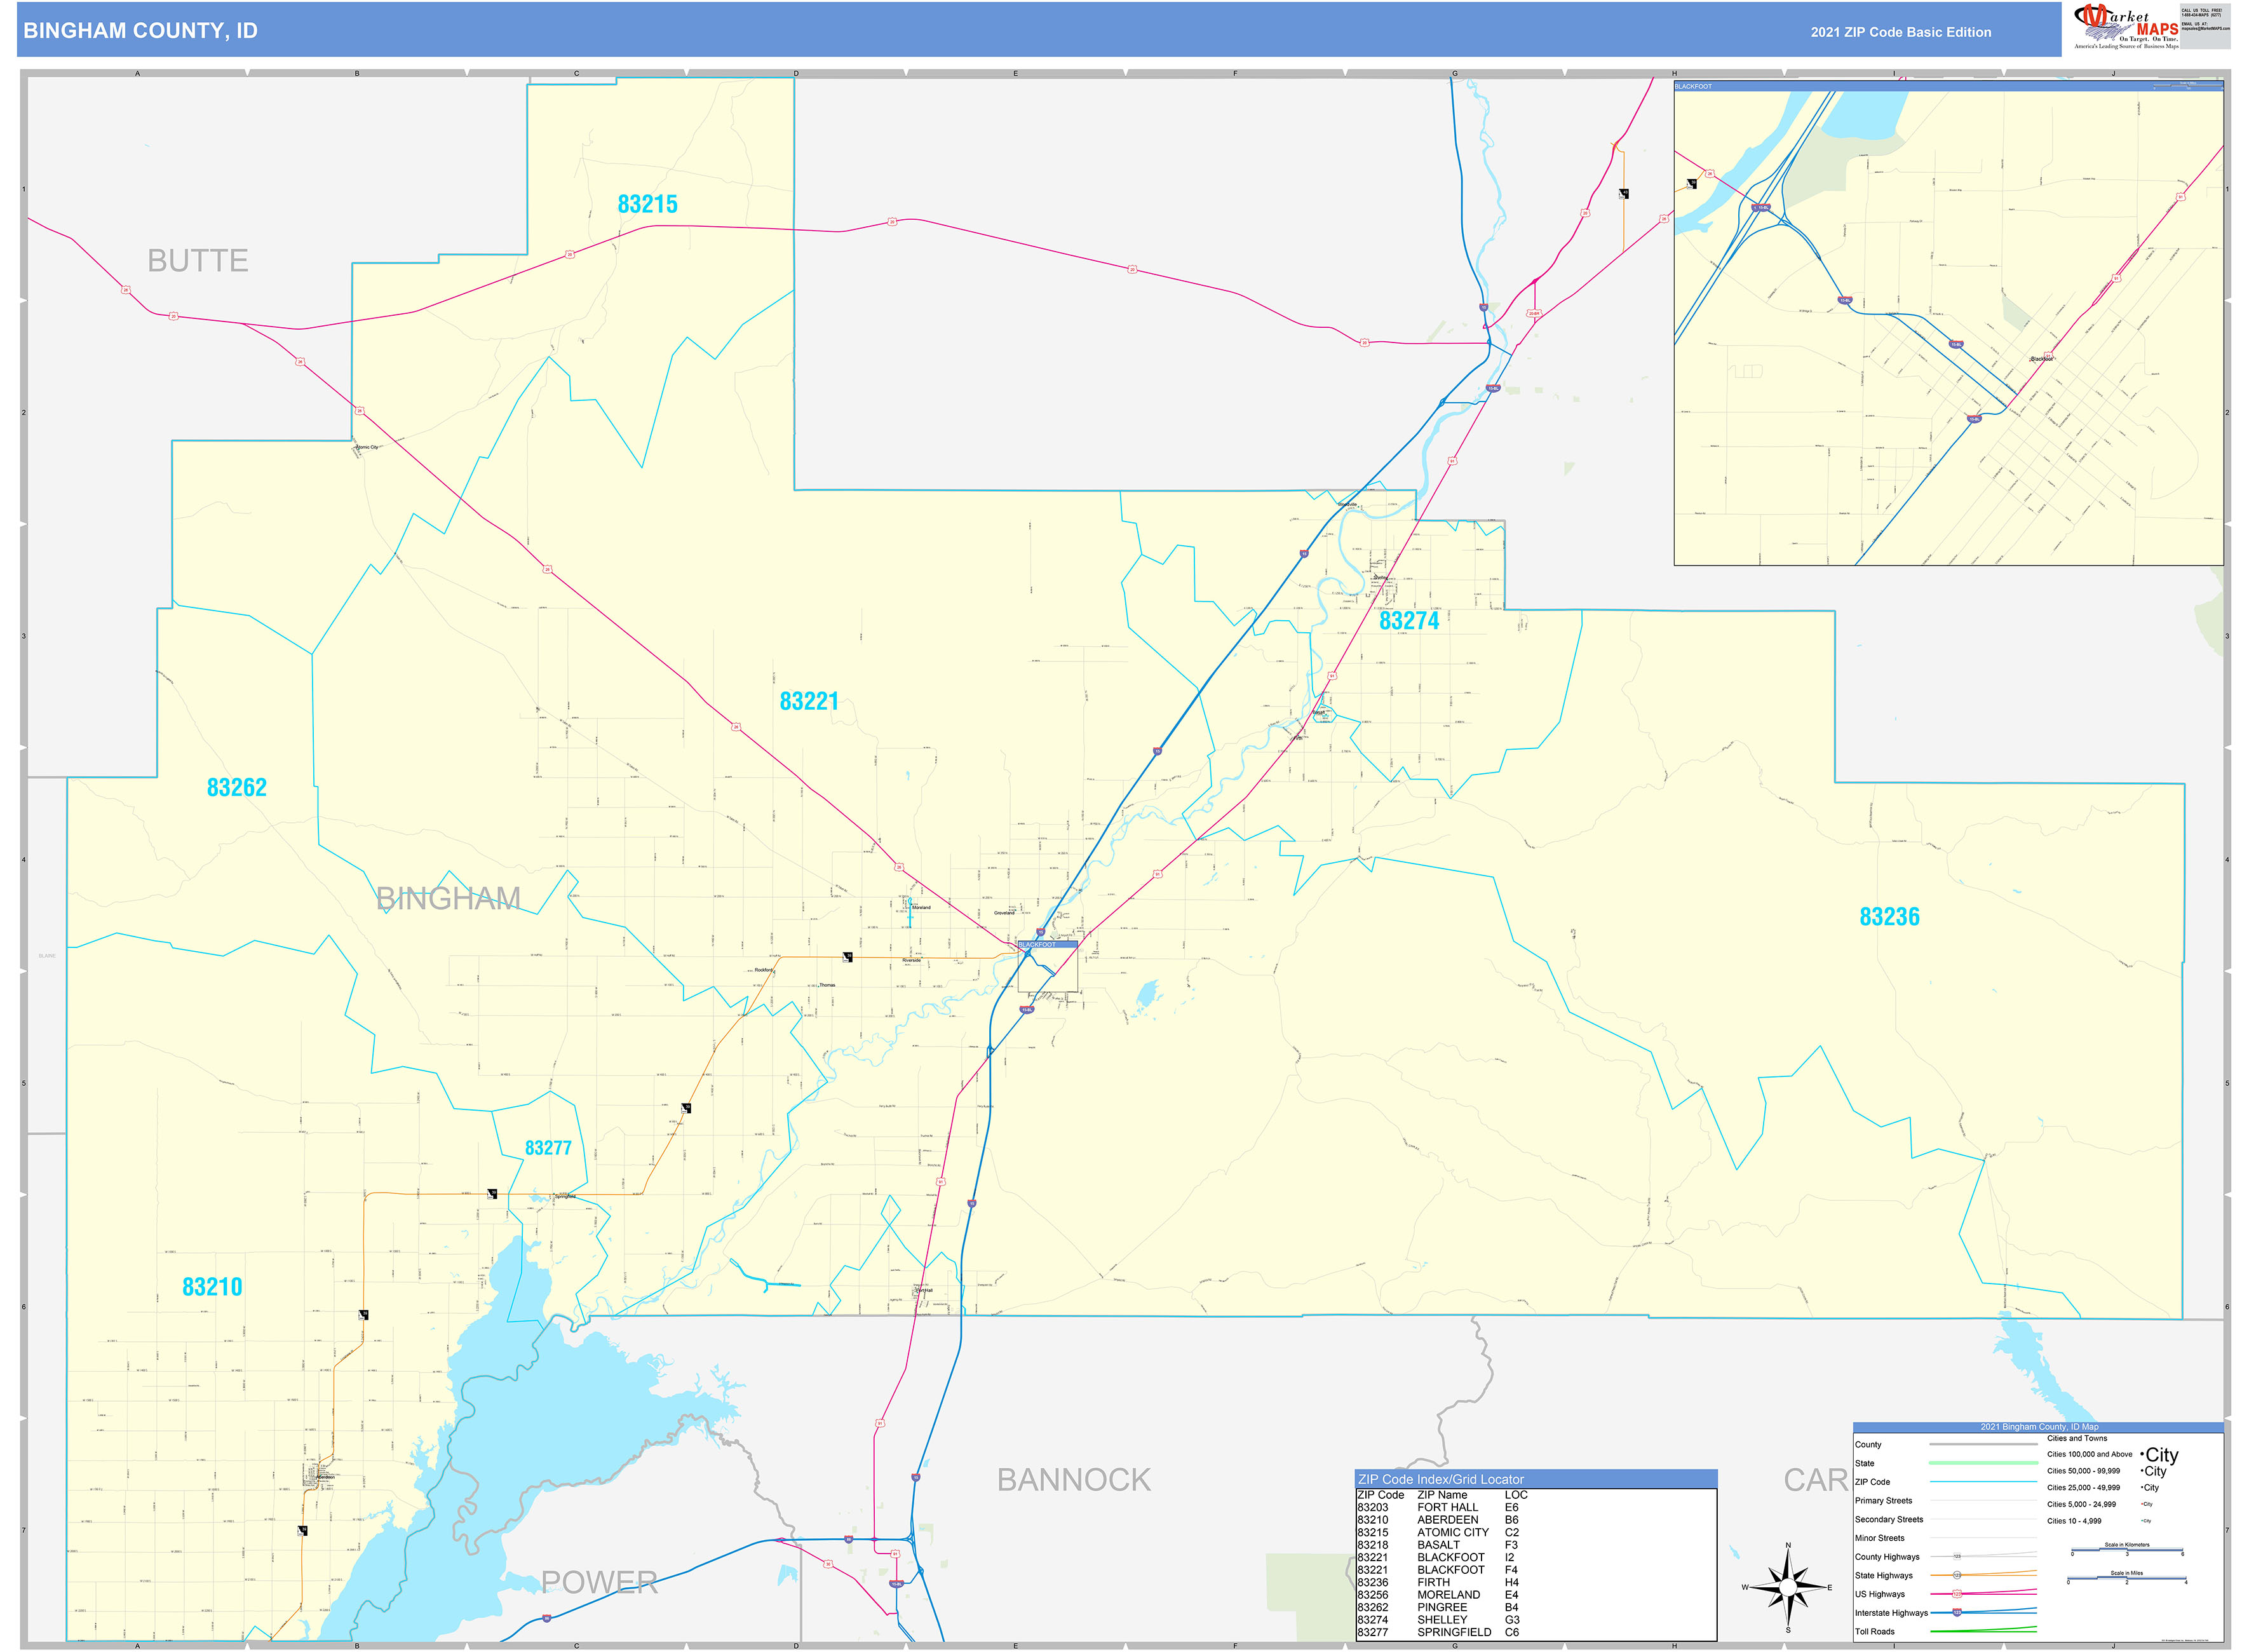 Bingham County, ID Zip Code Wall Map Basic Style by MarketMAPS MapSales